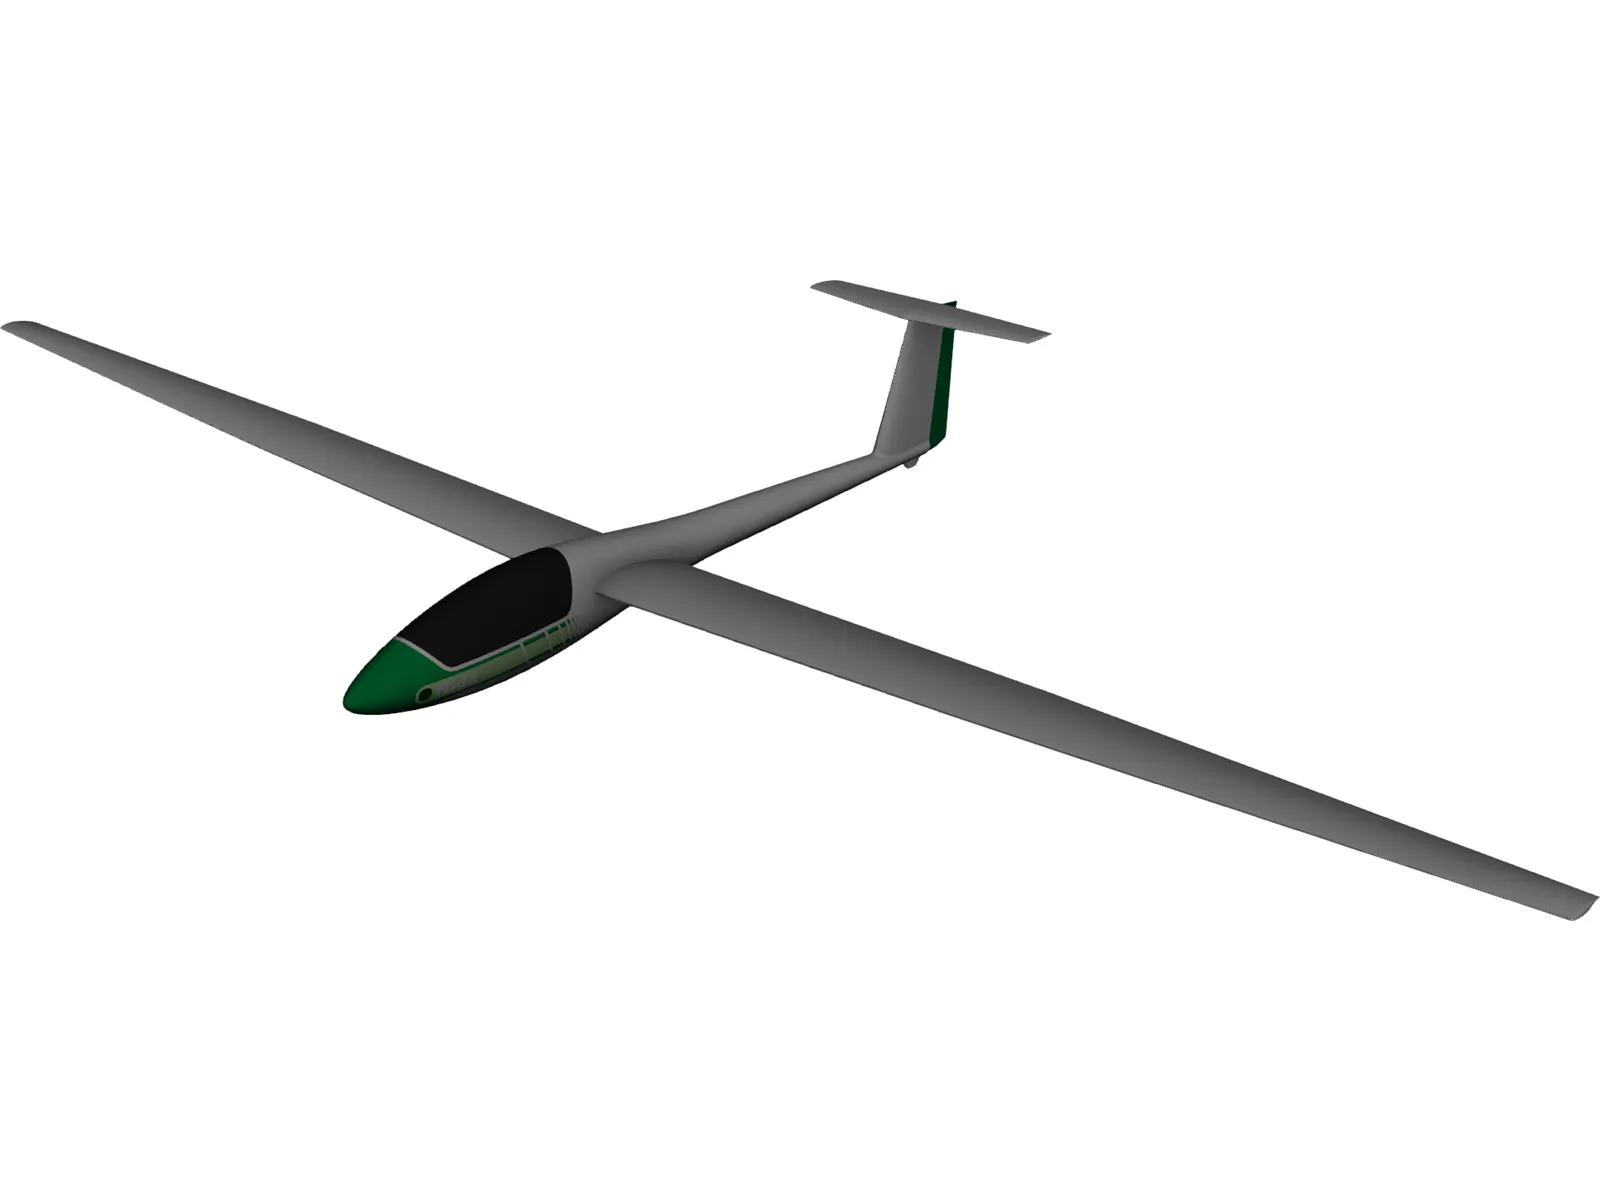 LAK-11 Nida Glider 3D Model